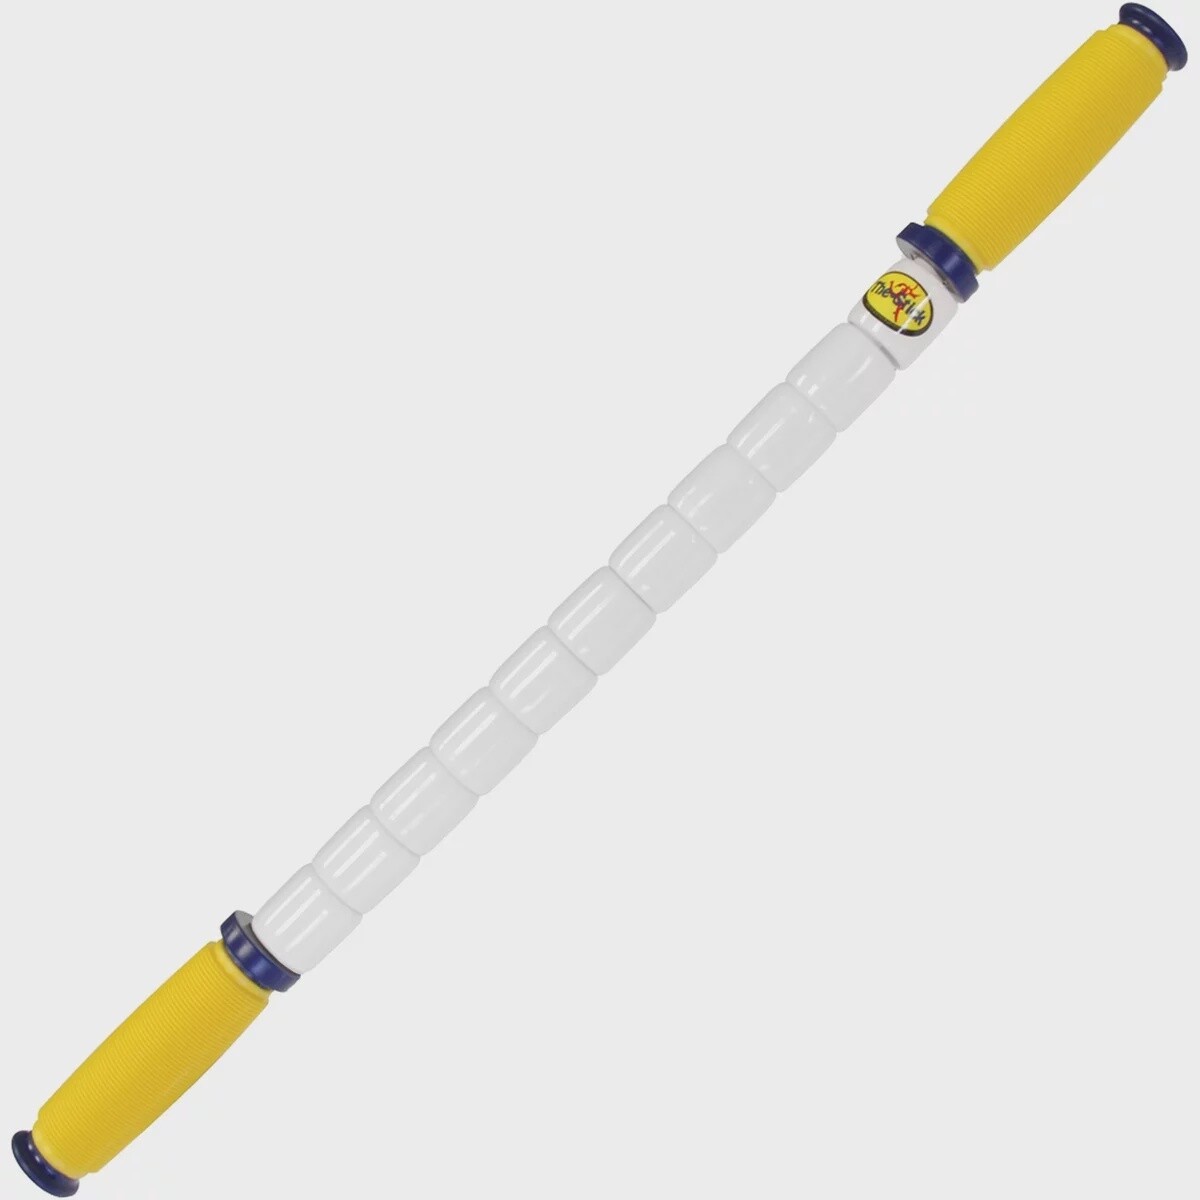 The Stick Marathon Stick With Yellow Hand Grip